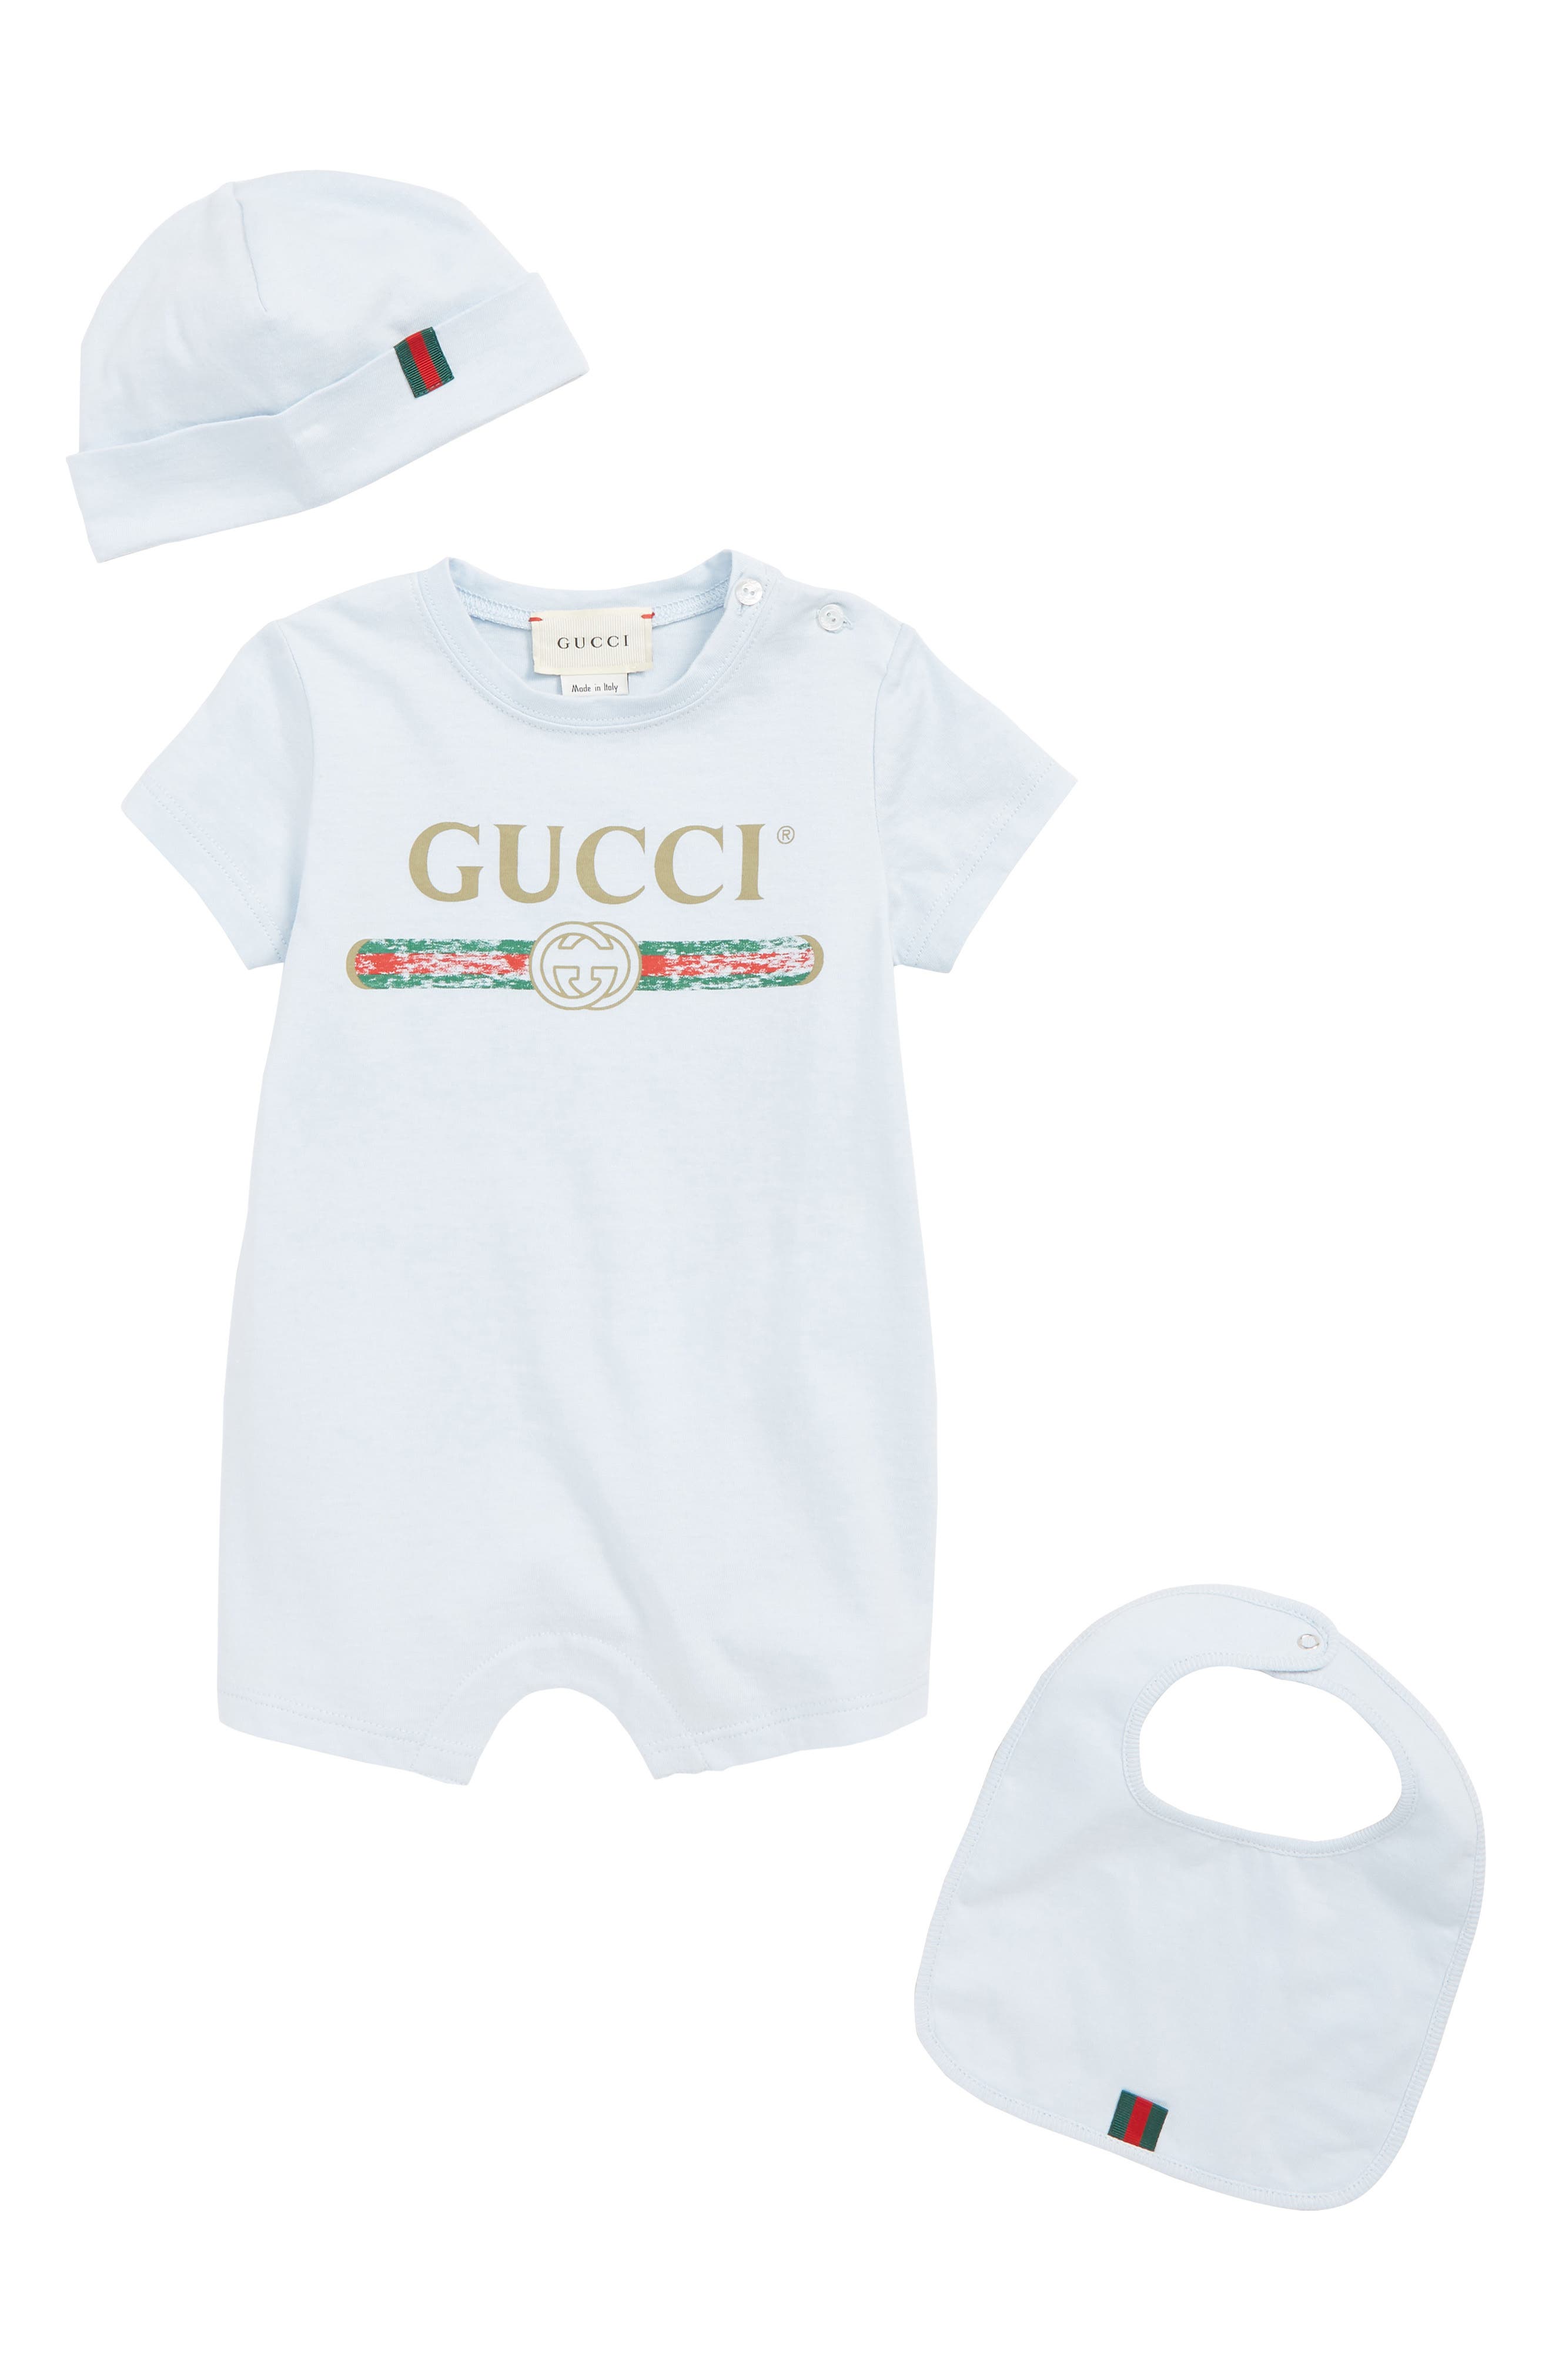 gucci baby shirt